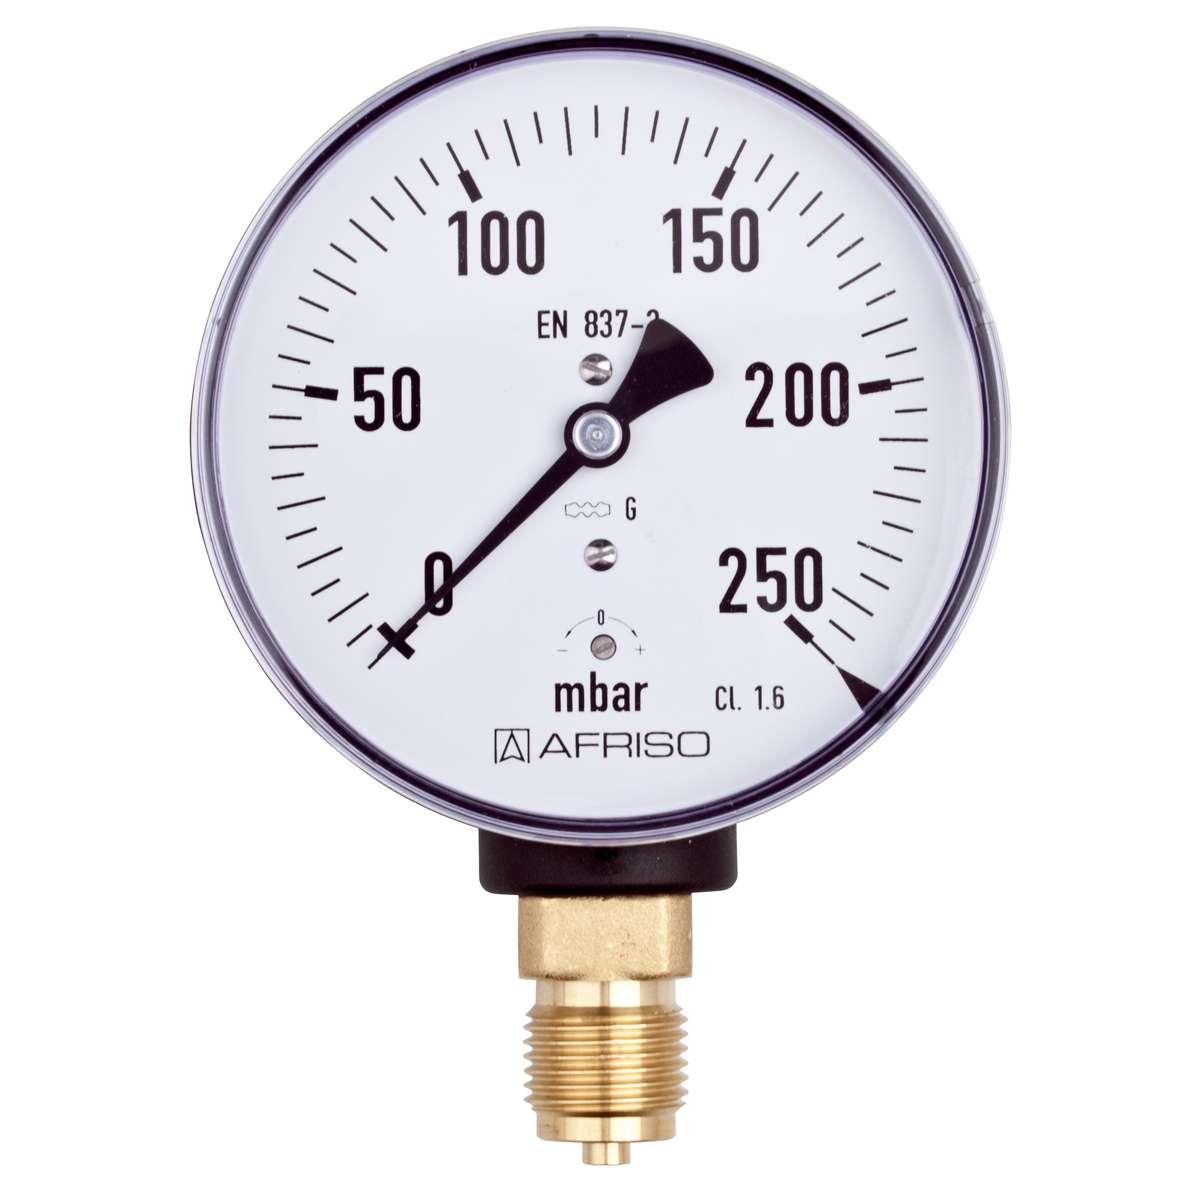 Manometr KP 100 pro plynná média, Ø 100 mm, 0 ÷ 40 mbar, G½", radiální, typ D2 - AFRISO.CZ